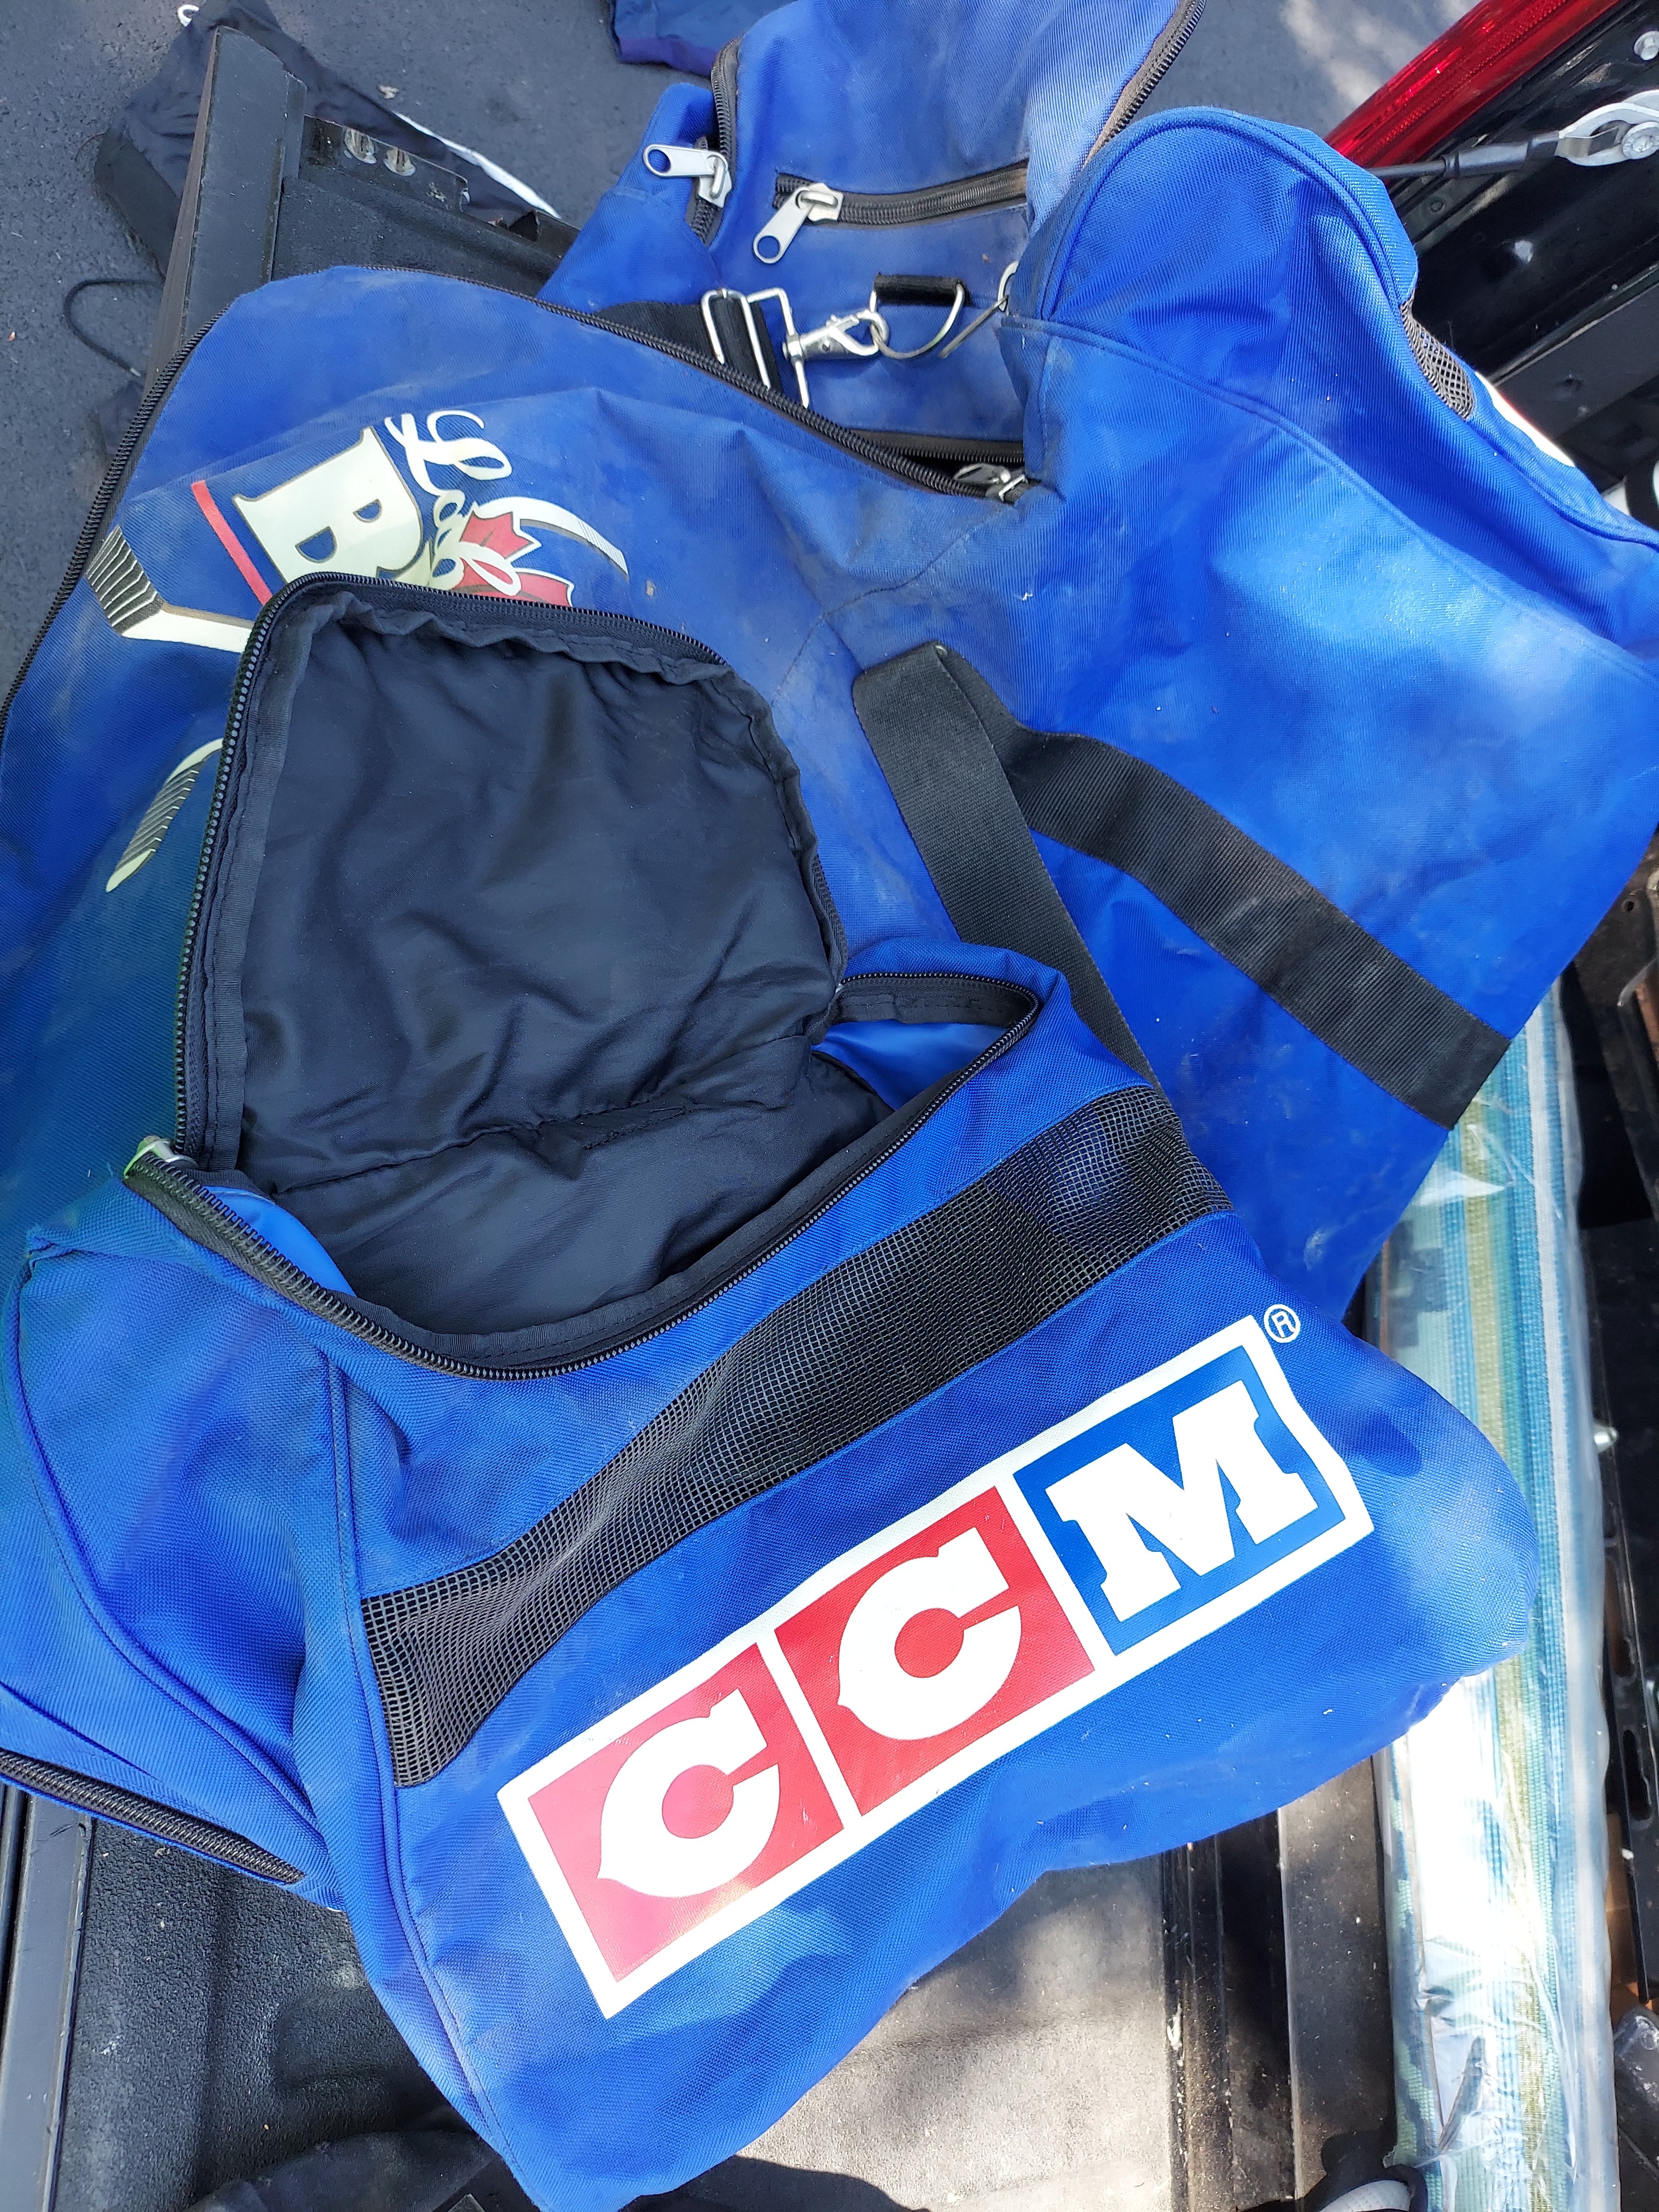 Used CCM Labatts Blue Hockey Bag